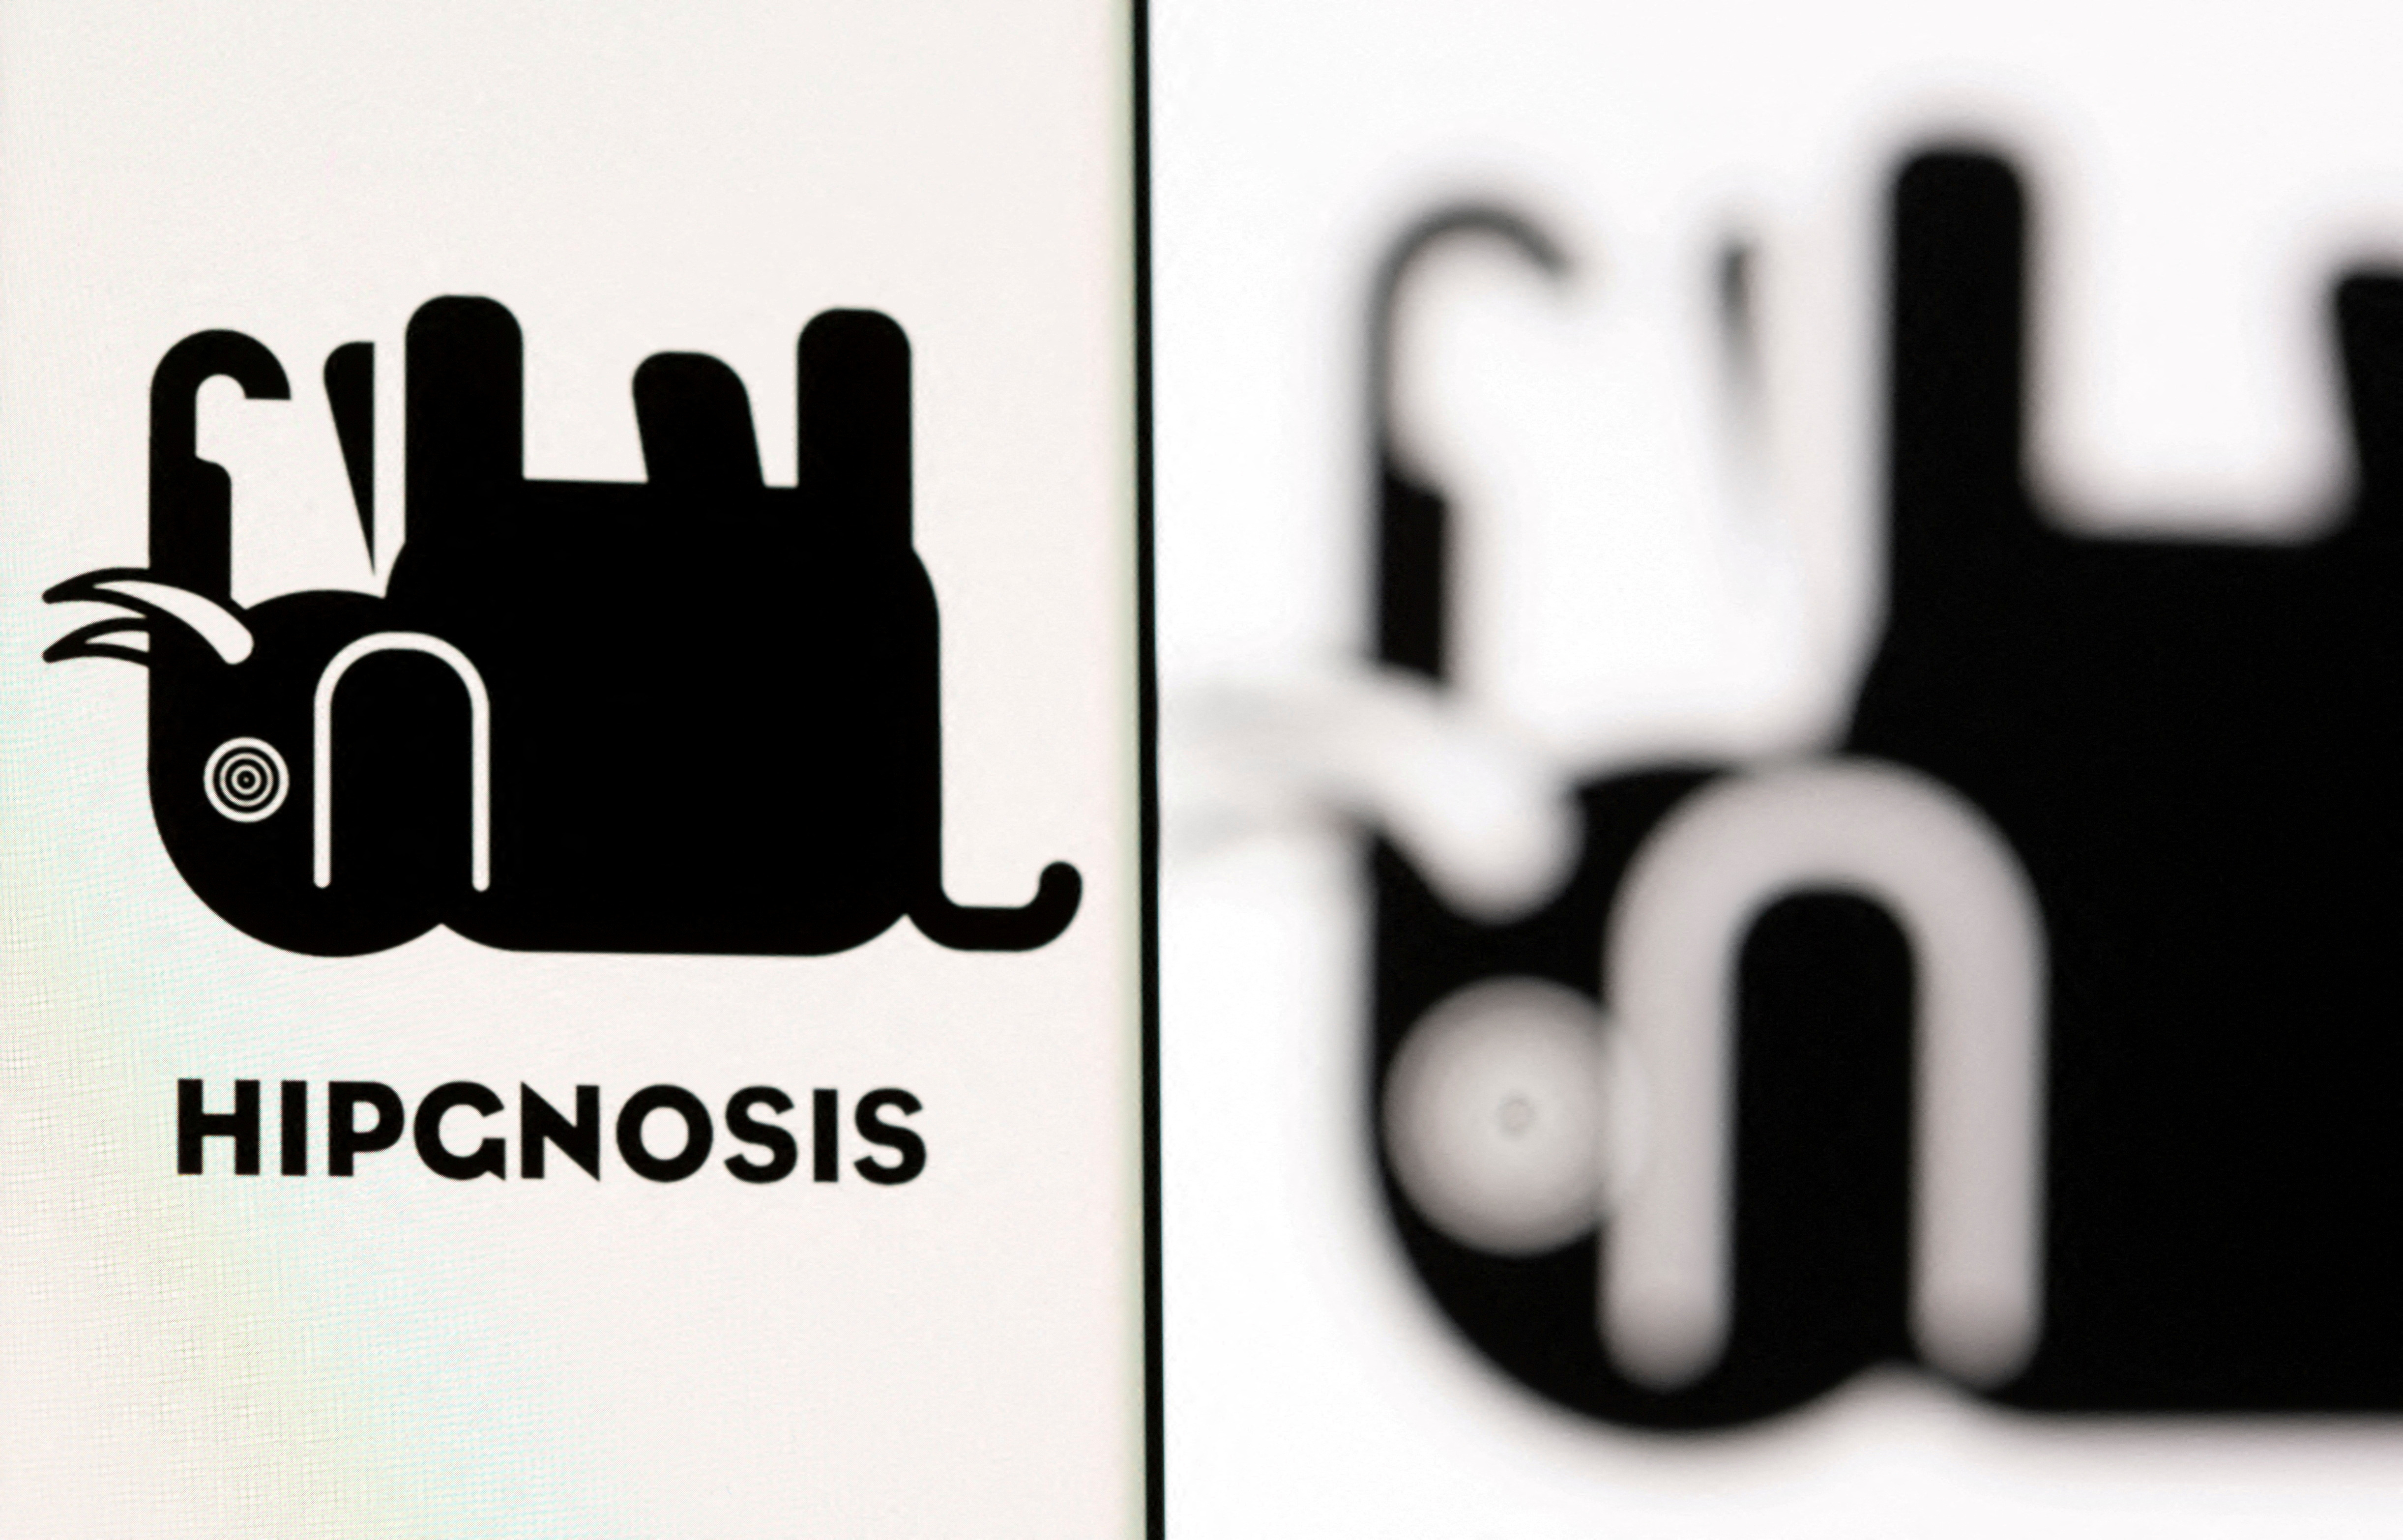 Hipgnosis logos